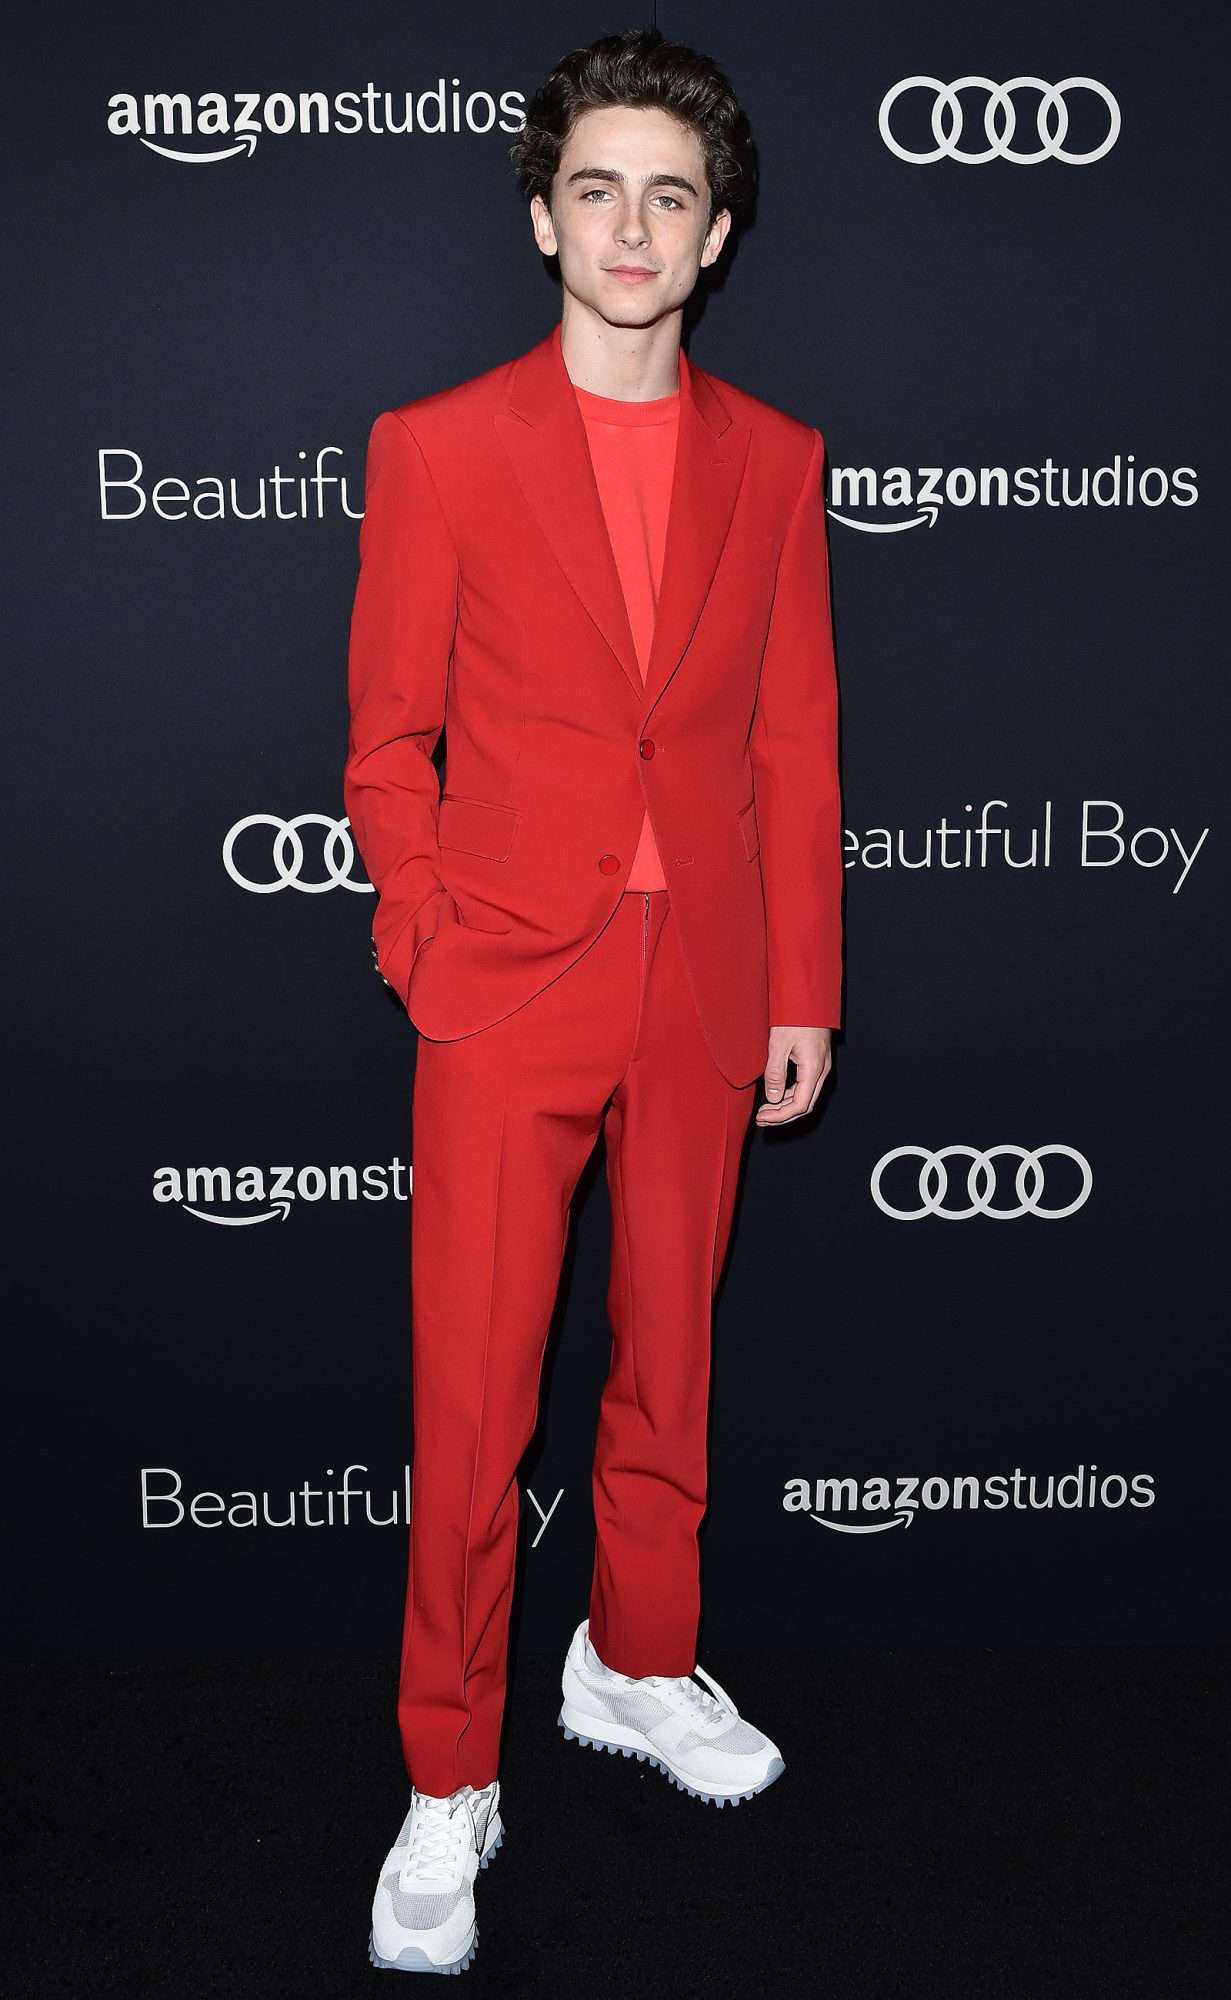 Amazon Studios Of Angeles Premiere Of "Beautiful Boy" - Arrivals